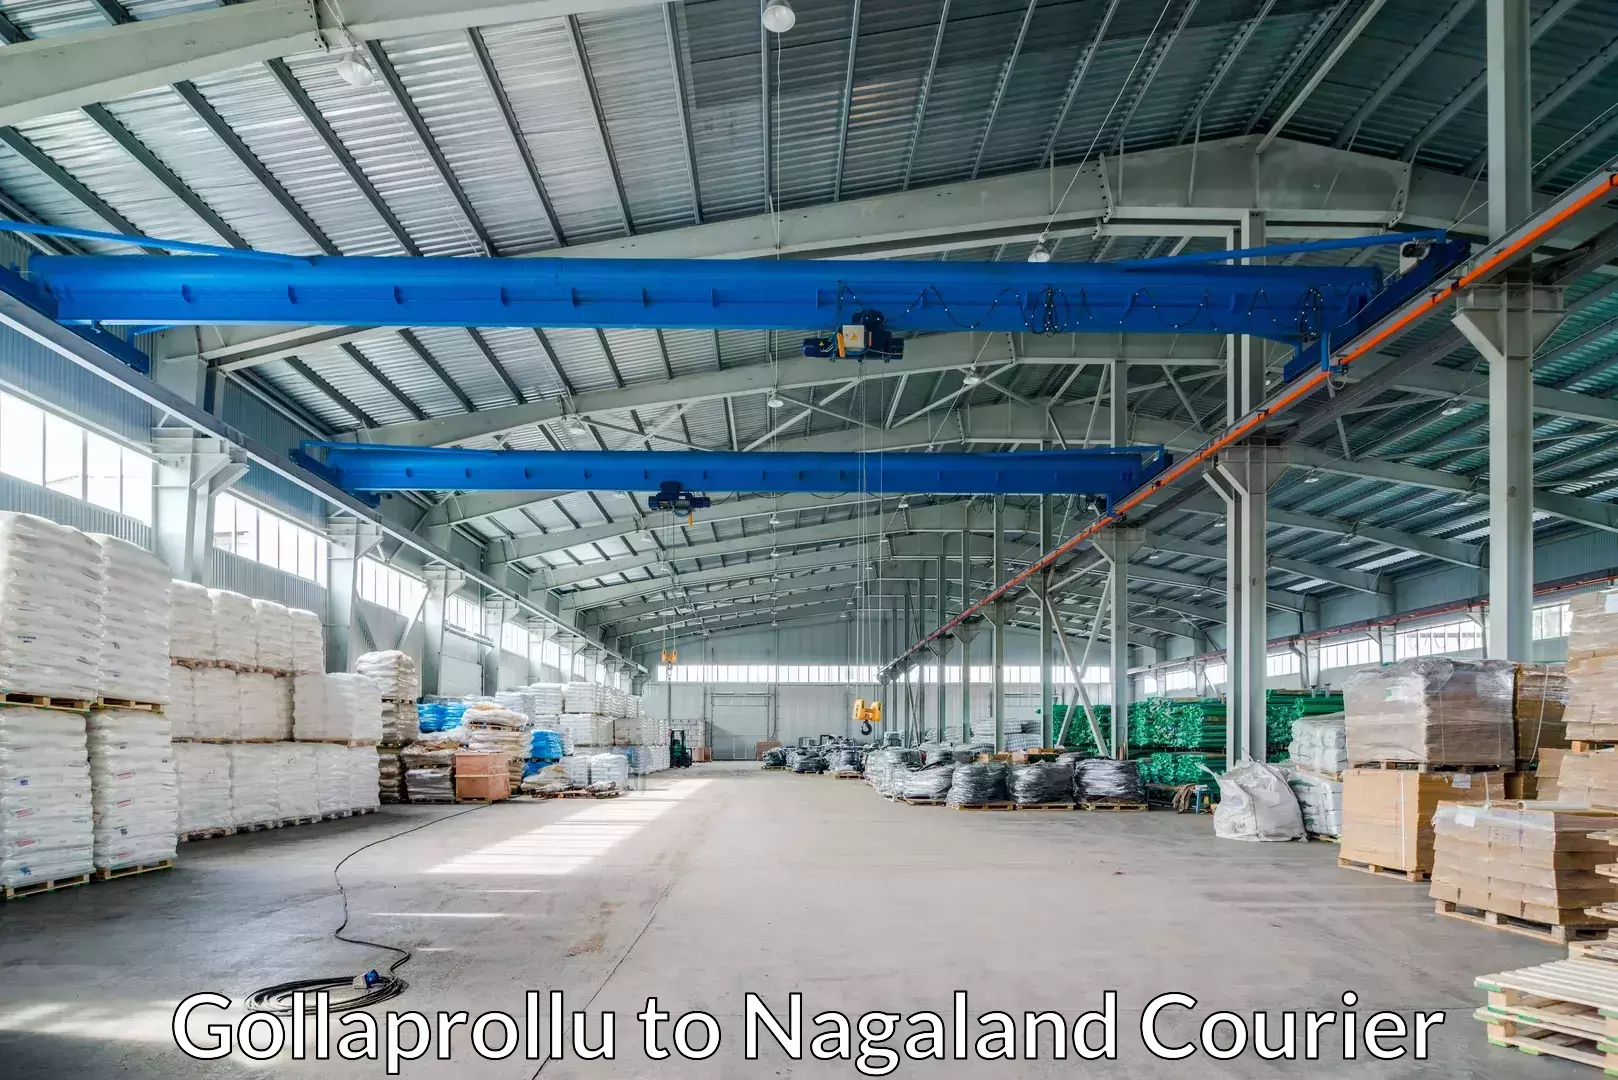 Expert moving and storage Gollaprollu to Nagaland